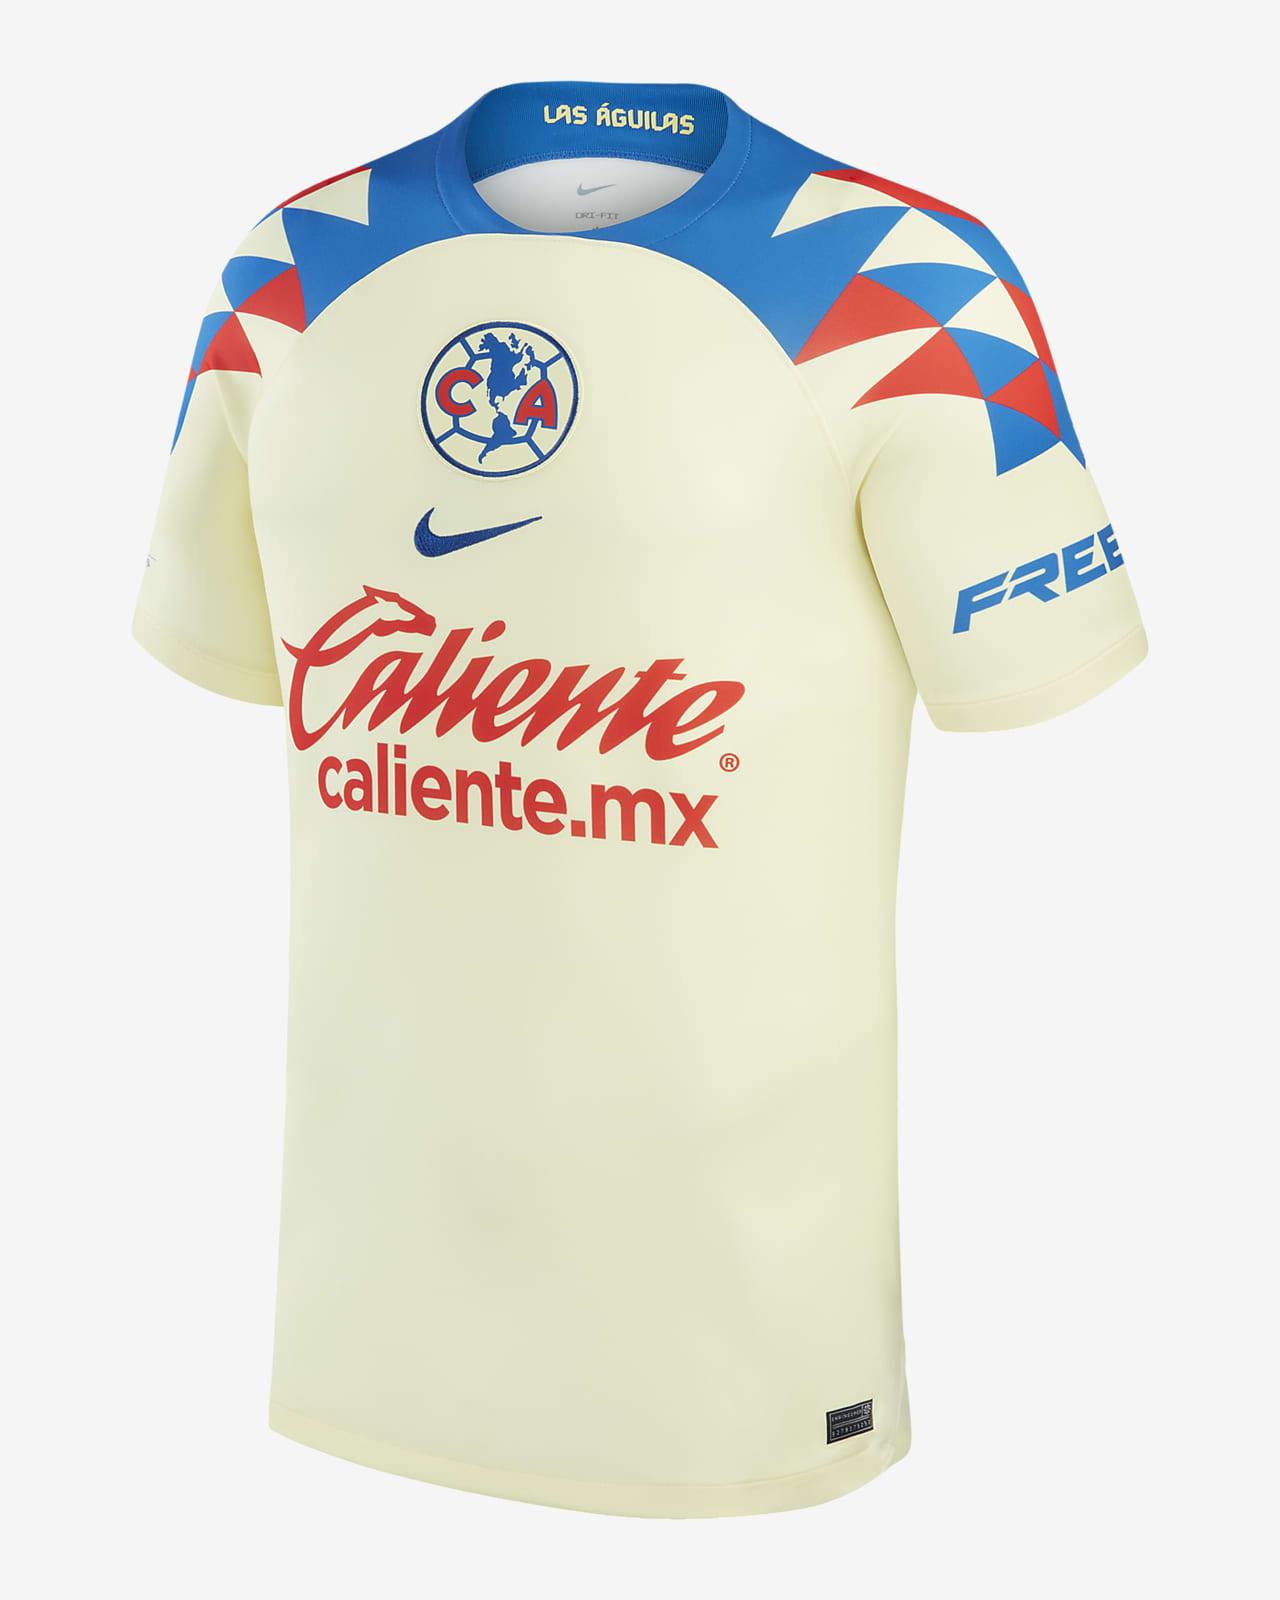 Club America 2022/2023 shirt number 9 roger martin  Club américa, Playera  club america, Club america futbol